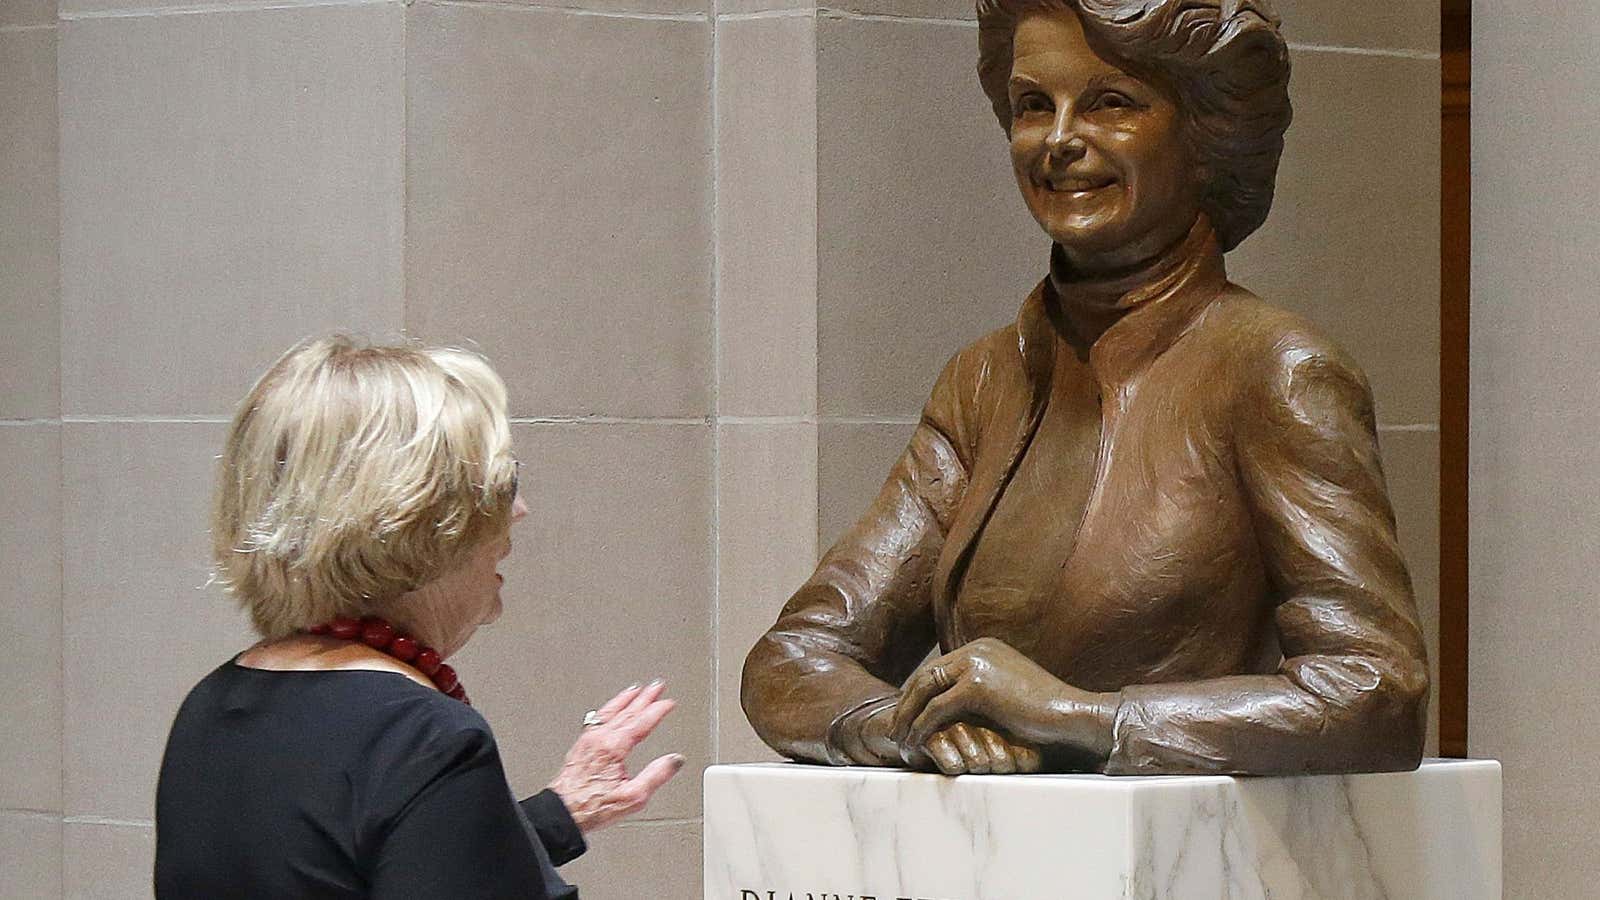 A bronze bust of Dianne Feinstein was completed in 2017 by artist Lisa Reinerston.